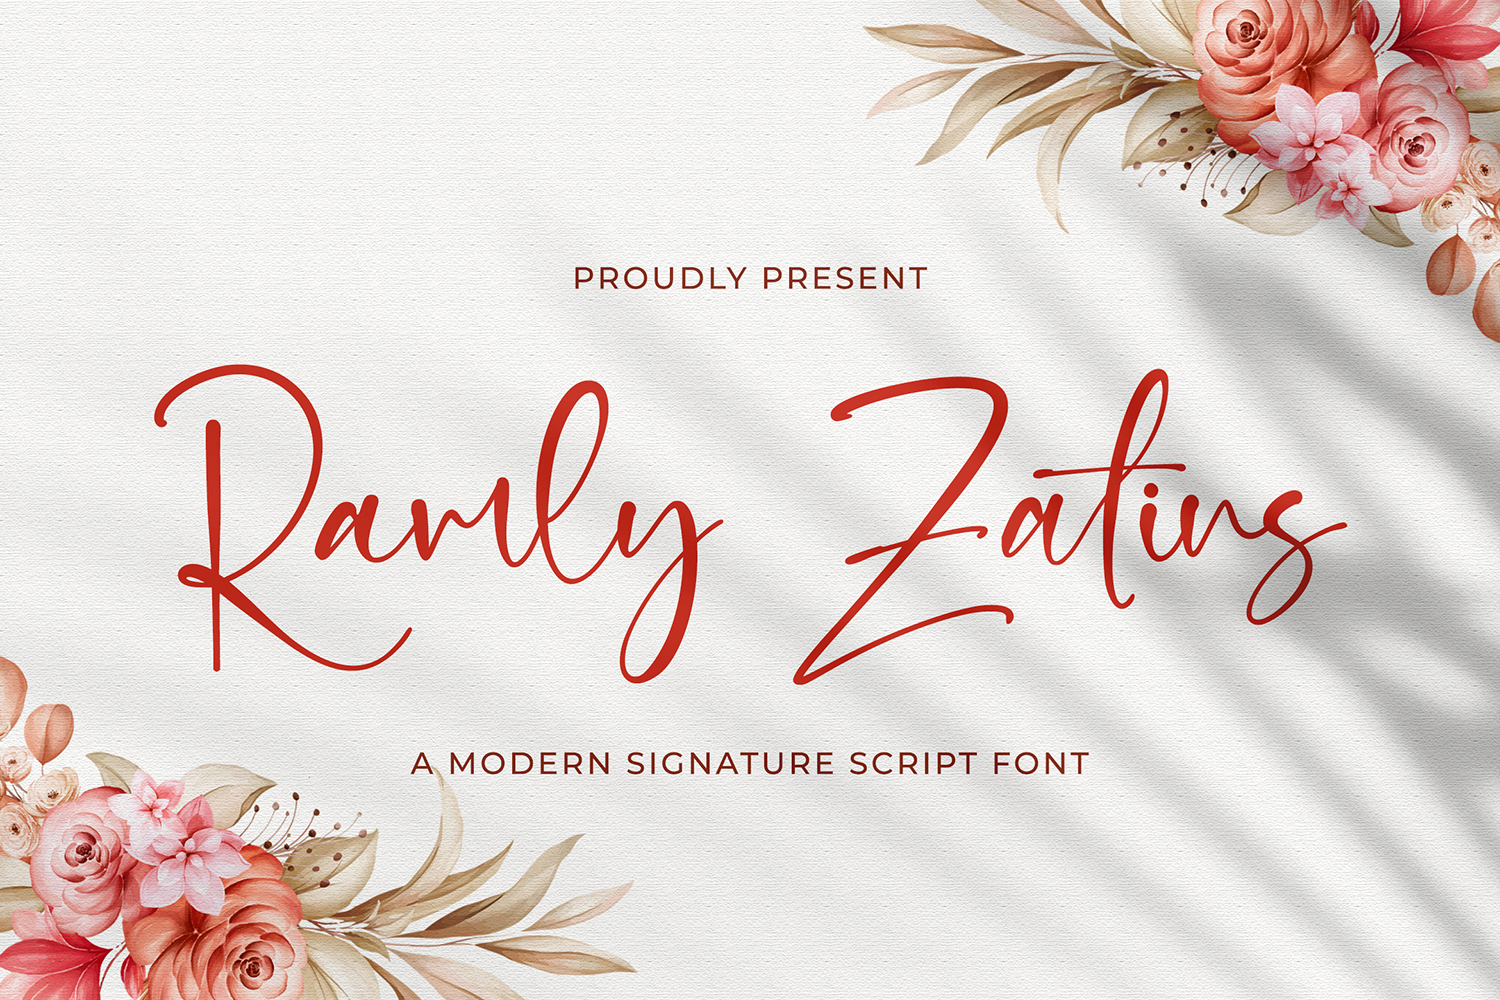 Ramly Zatins Free Font